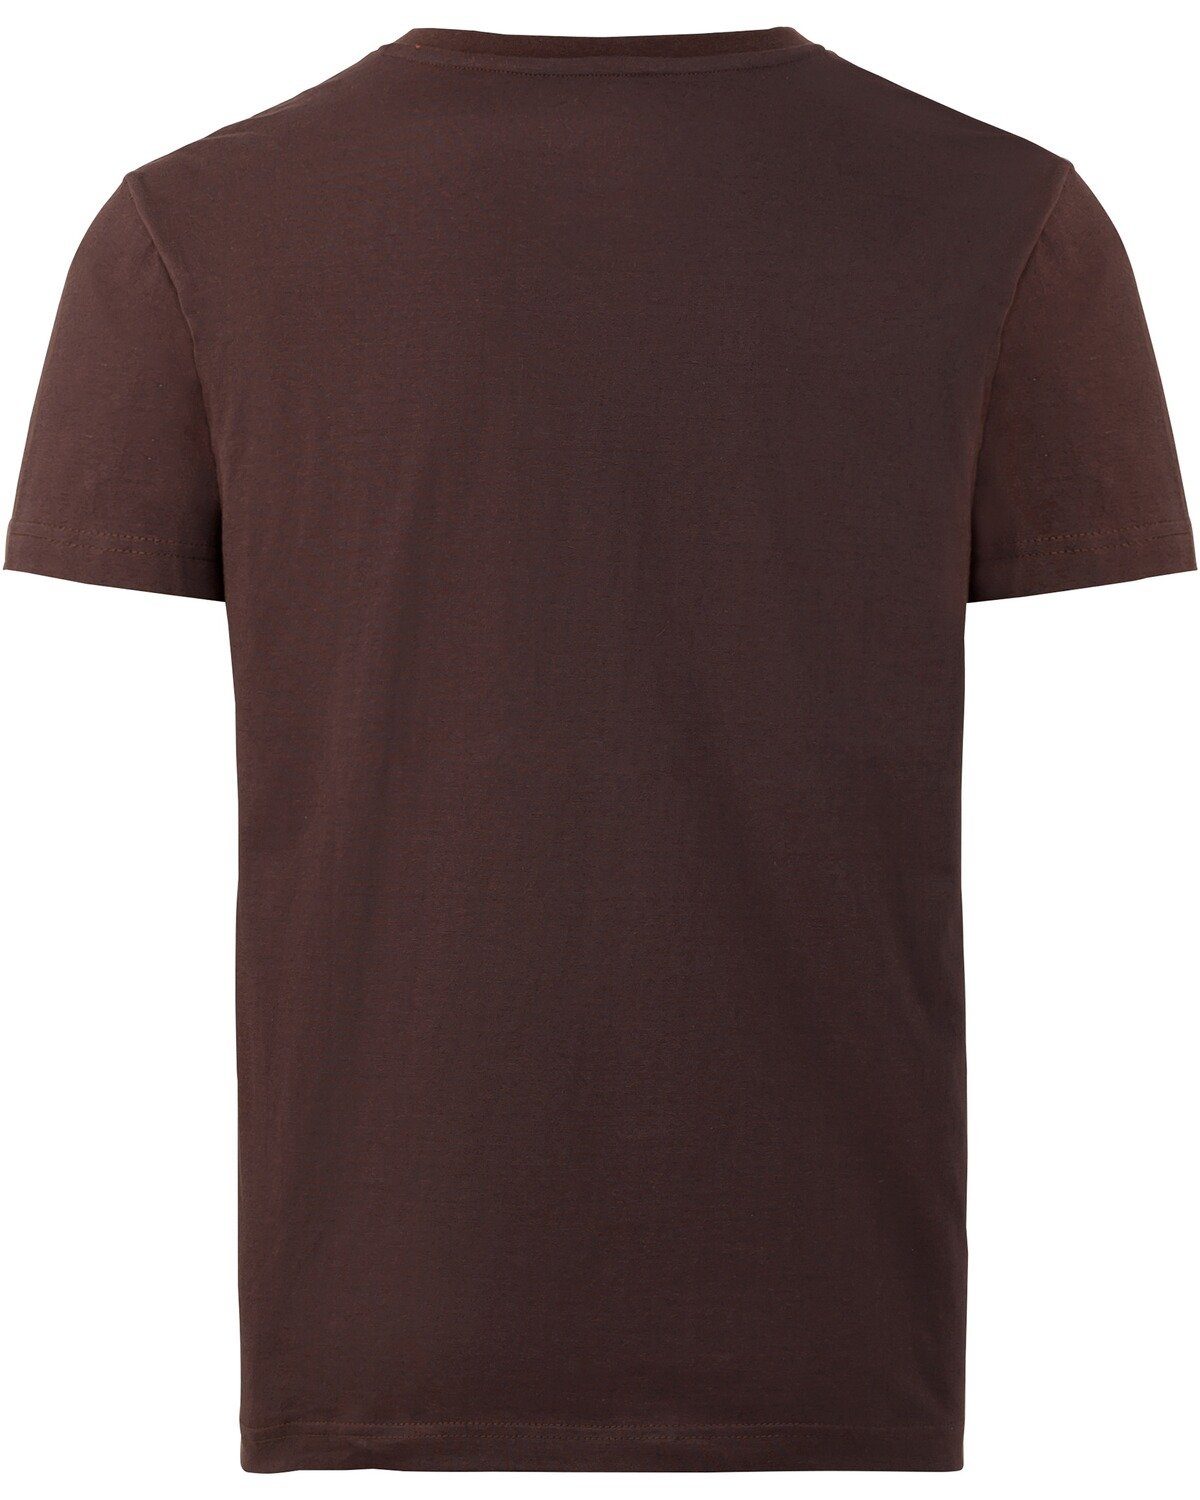 Parforce T-Shirt Braun T-Shirt Keiler-Print